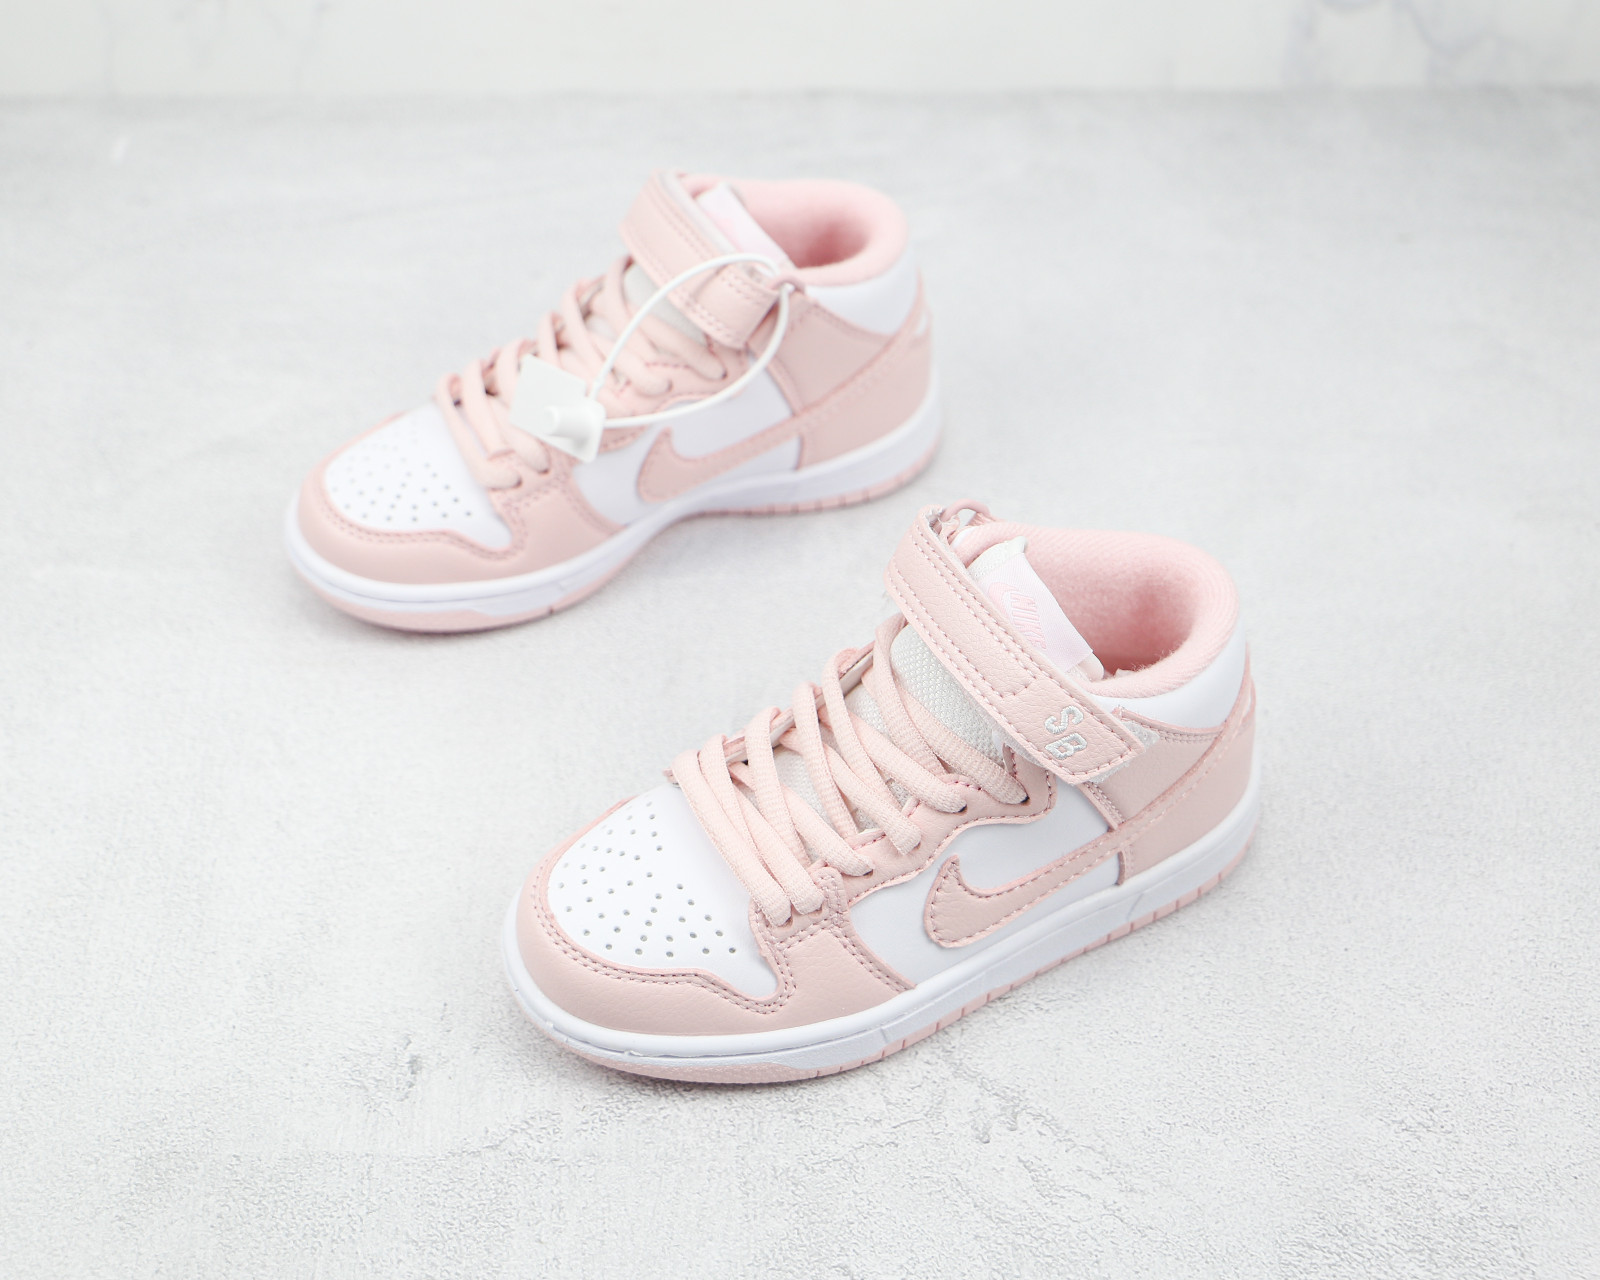 nike by eugene store - 331 - GmarShops - Nike SB Mid PRO ISO White Pink Kids Shoes CD6754